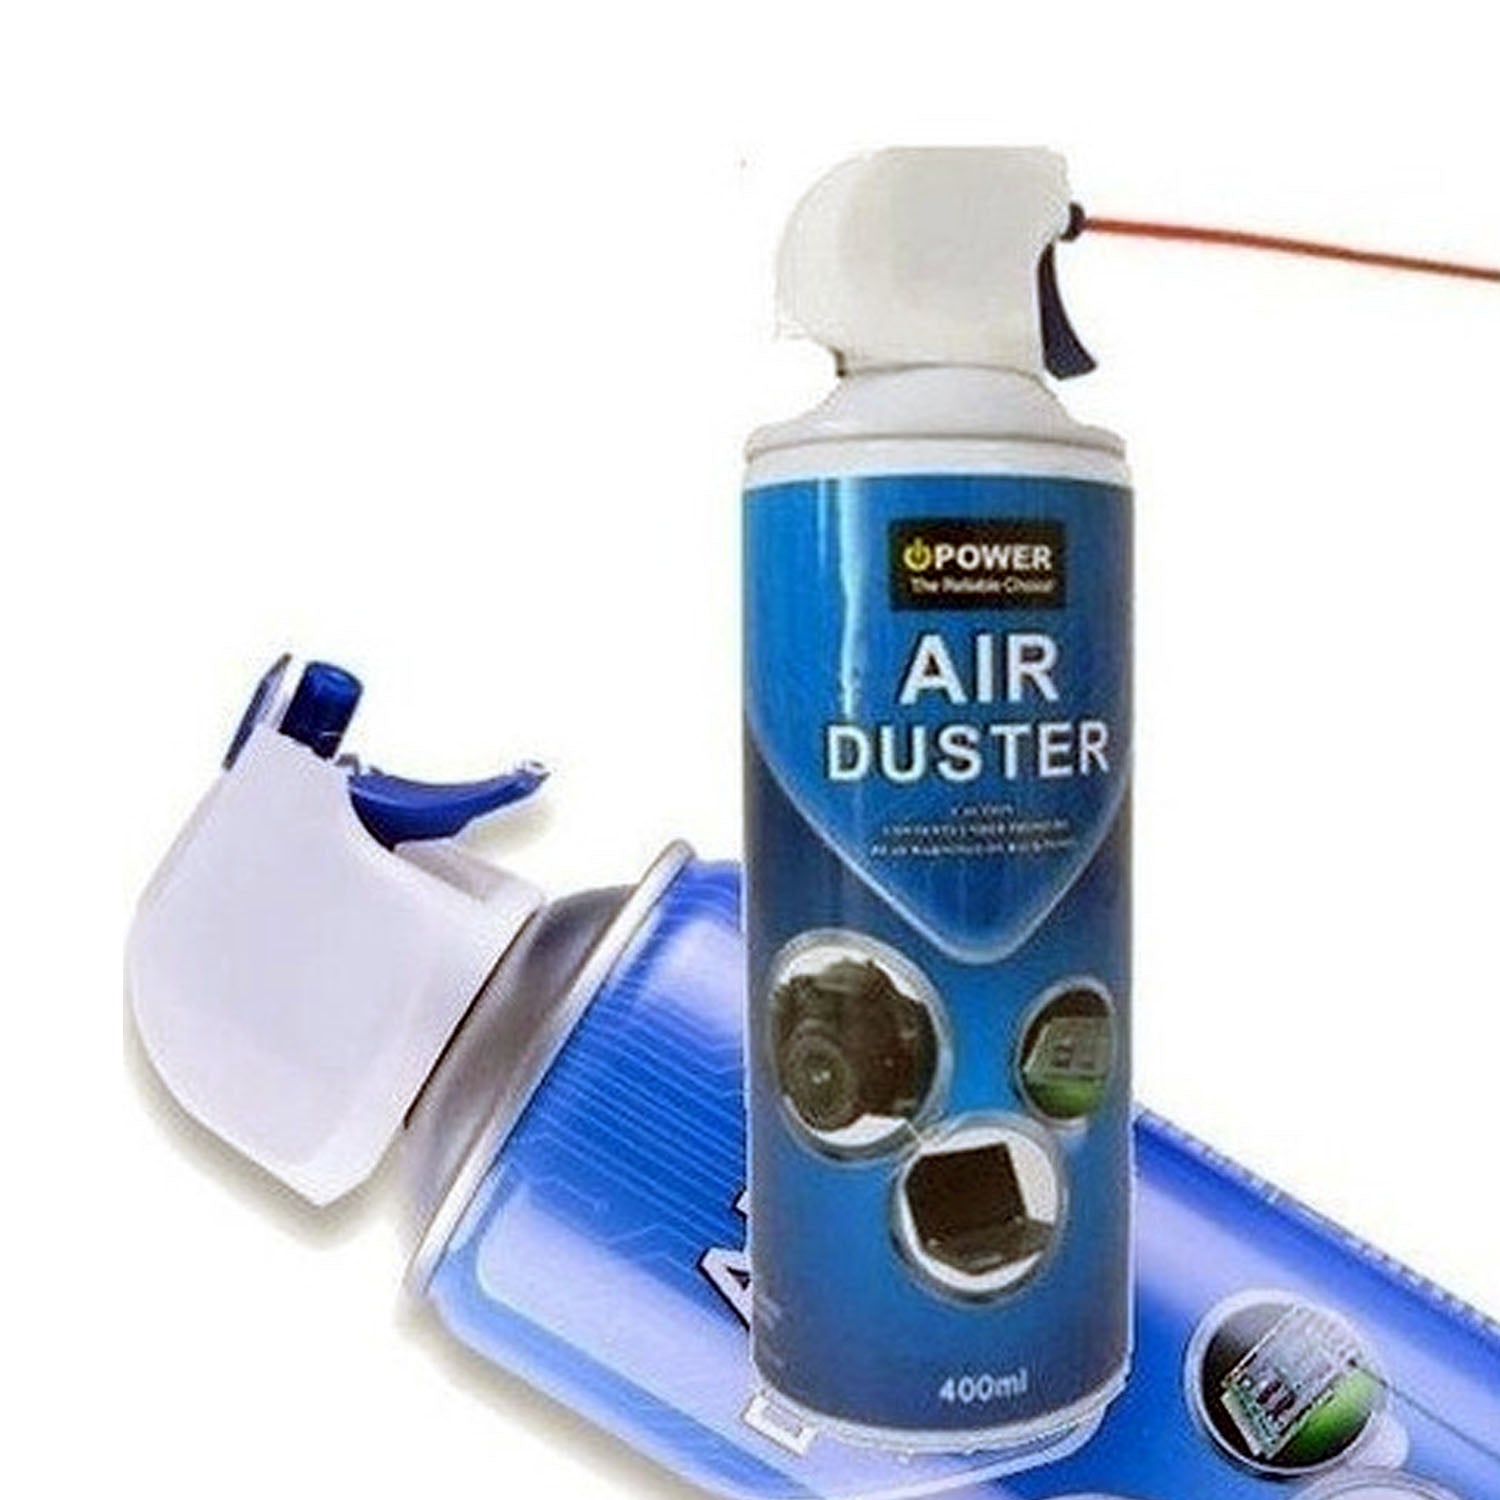 Aire Comprimido Spray Multiproposito Limpieza Pc Air Duster